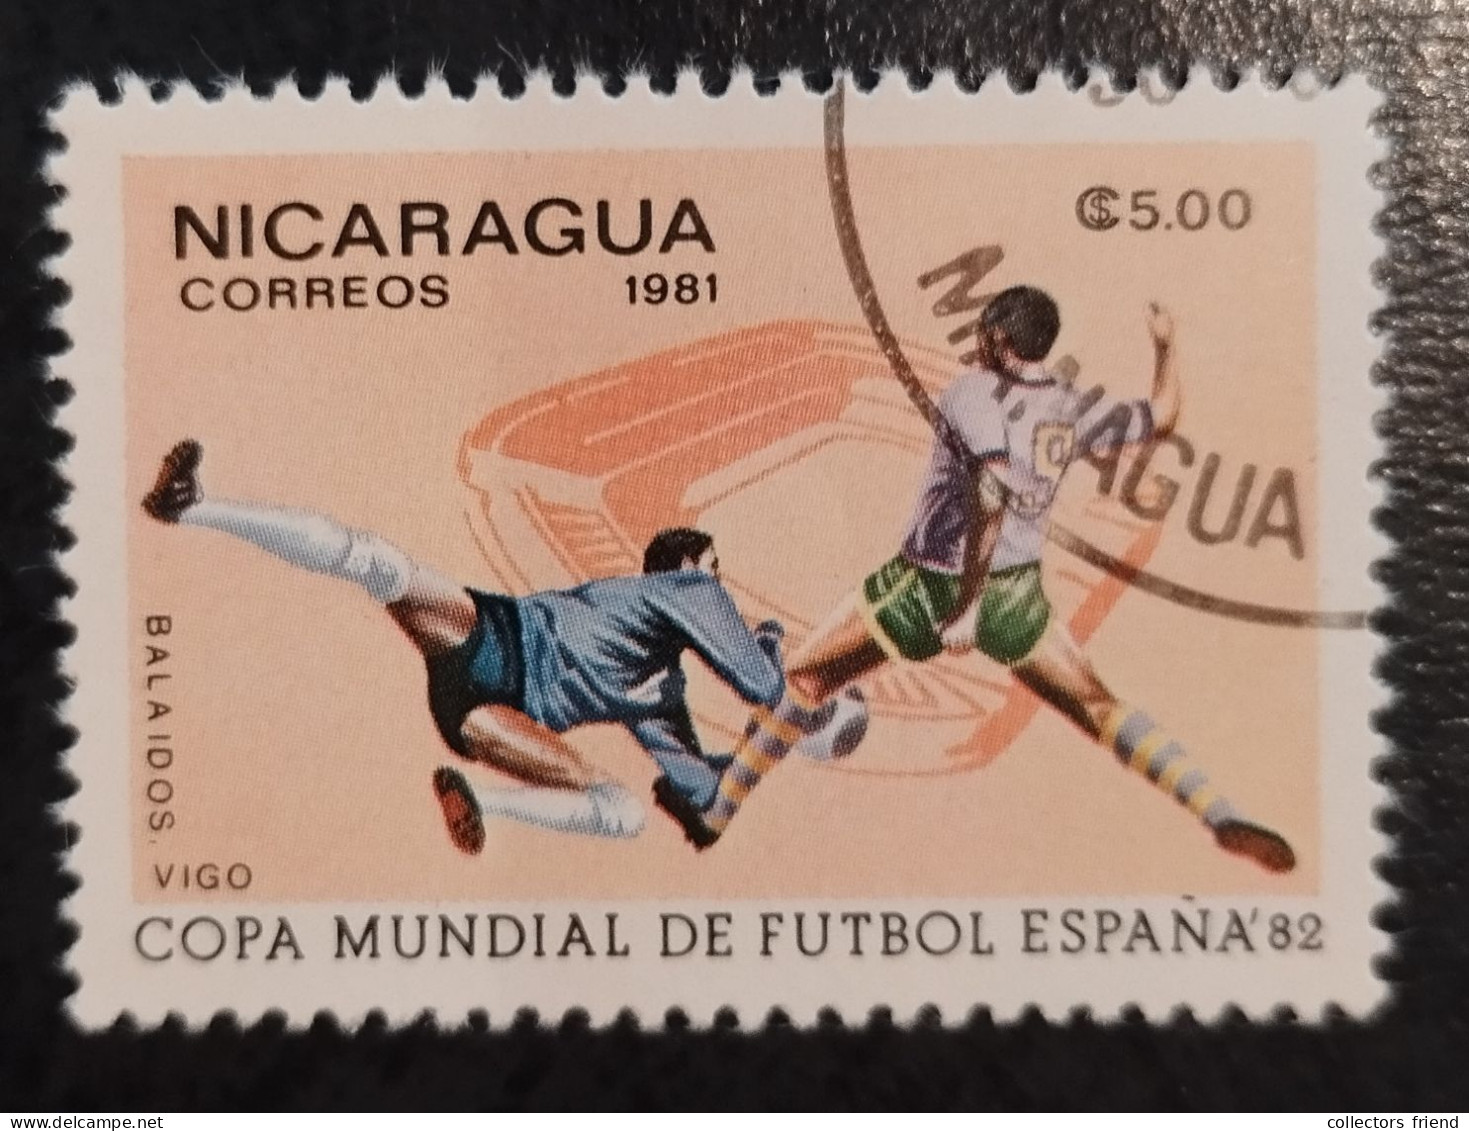 Nicaragua - 1981 - FOOTBALL FUSSBALL SOCCER - Used - 1982 – Spain